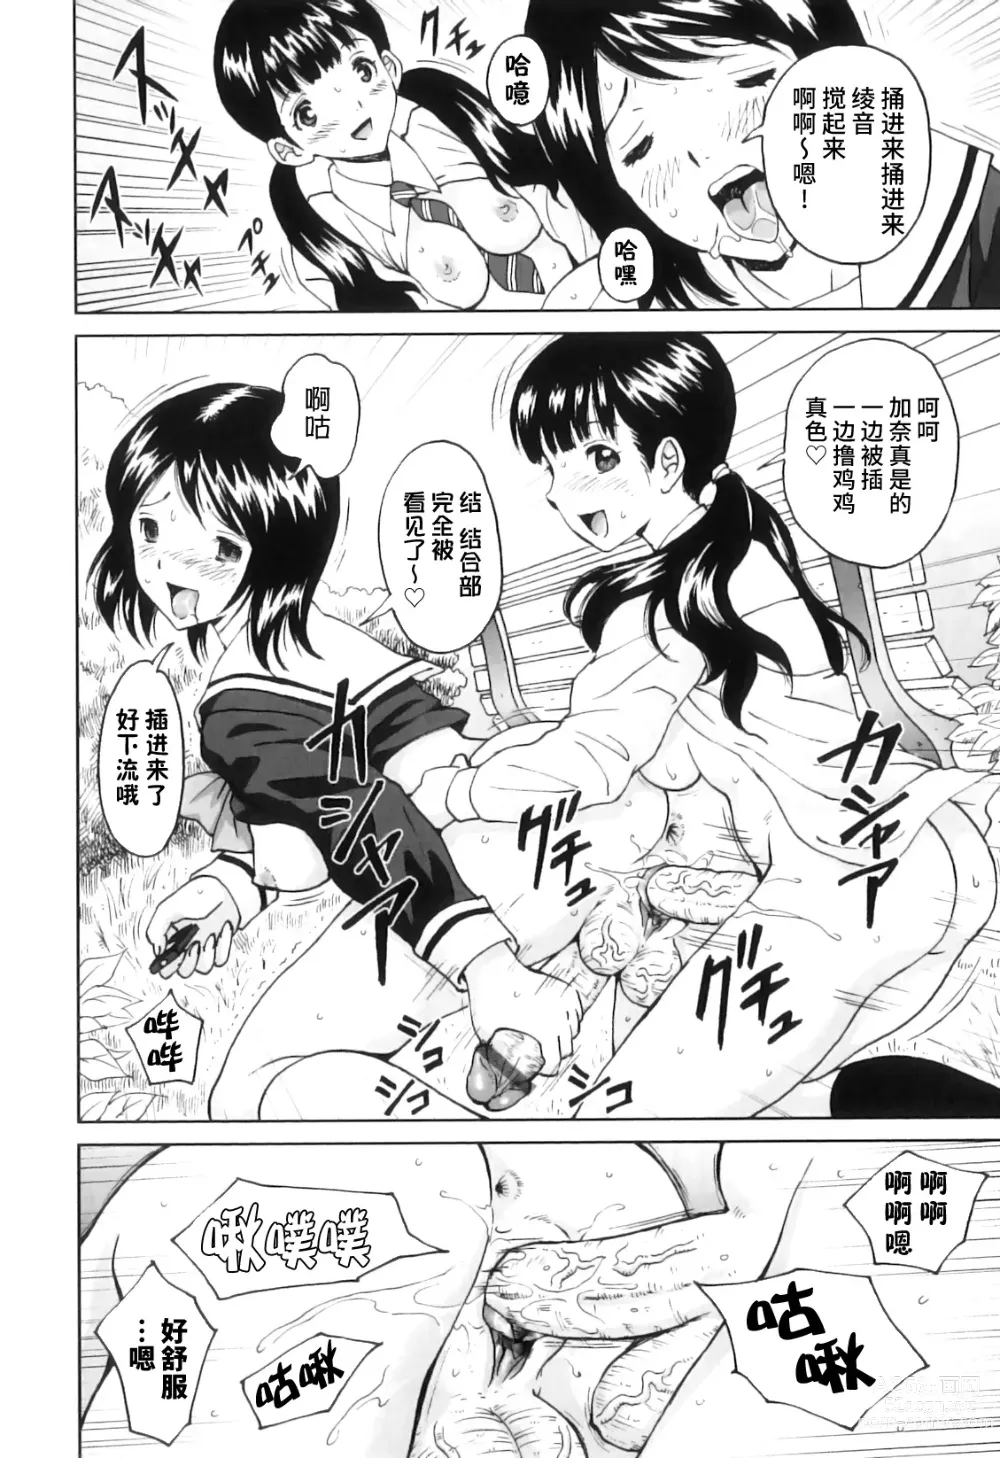 Page 29 of manga FutaSuki!